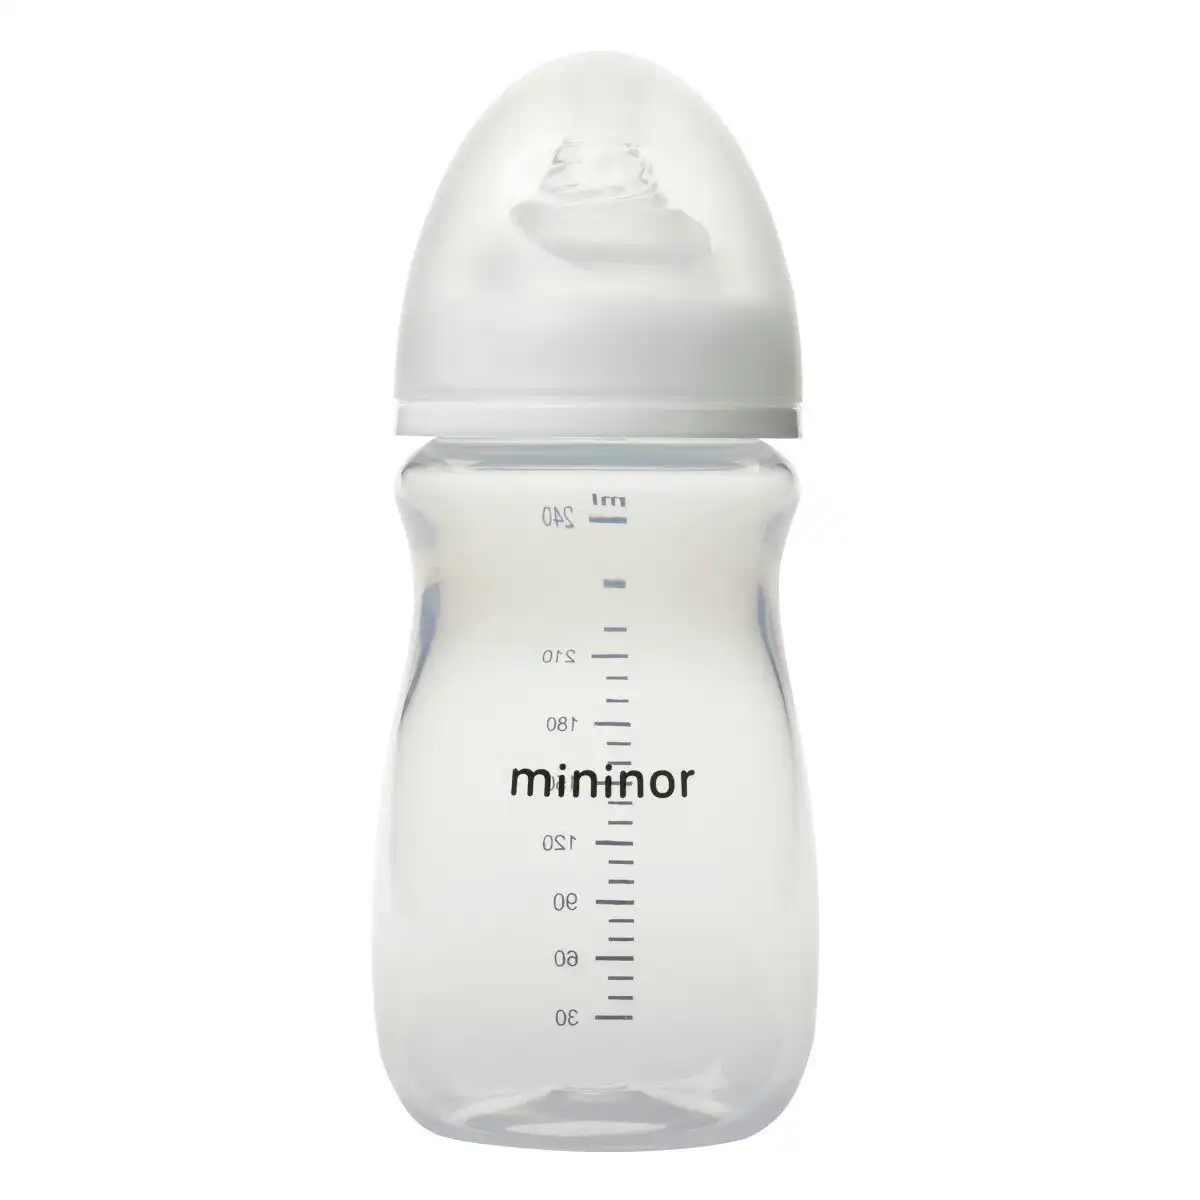 Mininor Baby/Infant 240ml PP Feeding Bottle w/ Anti-Colic Silicone Teat Clear